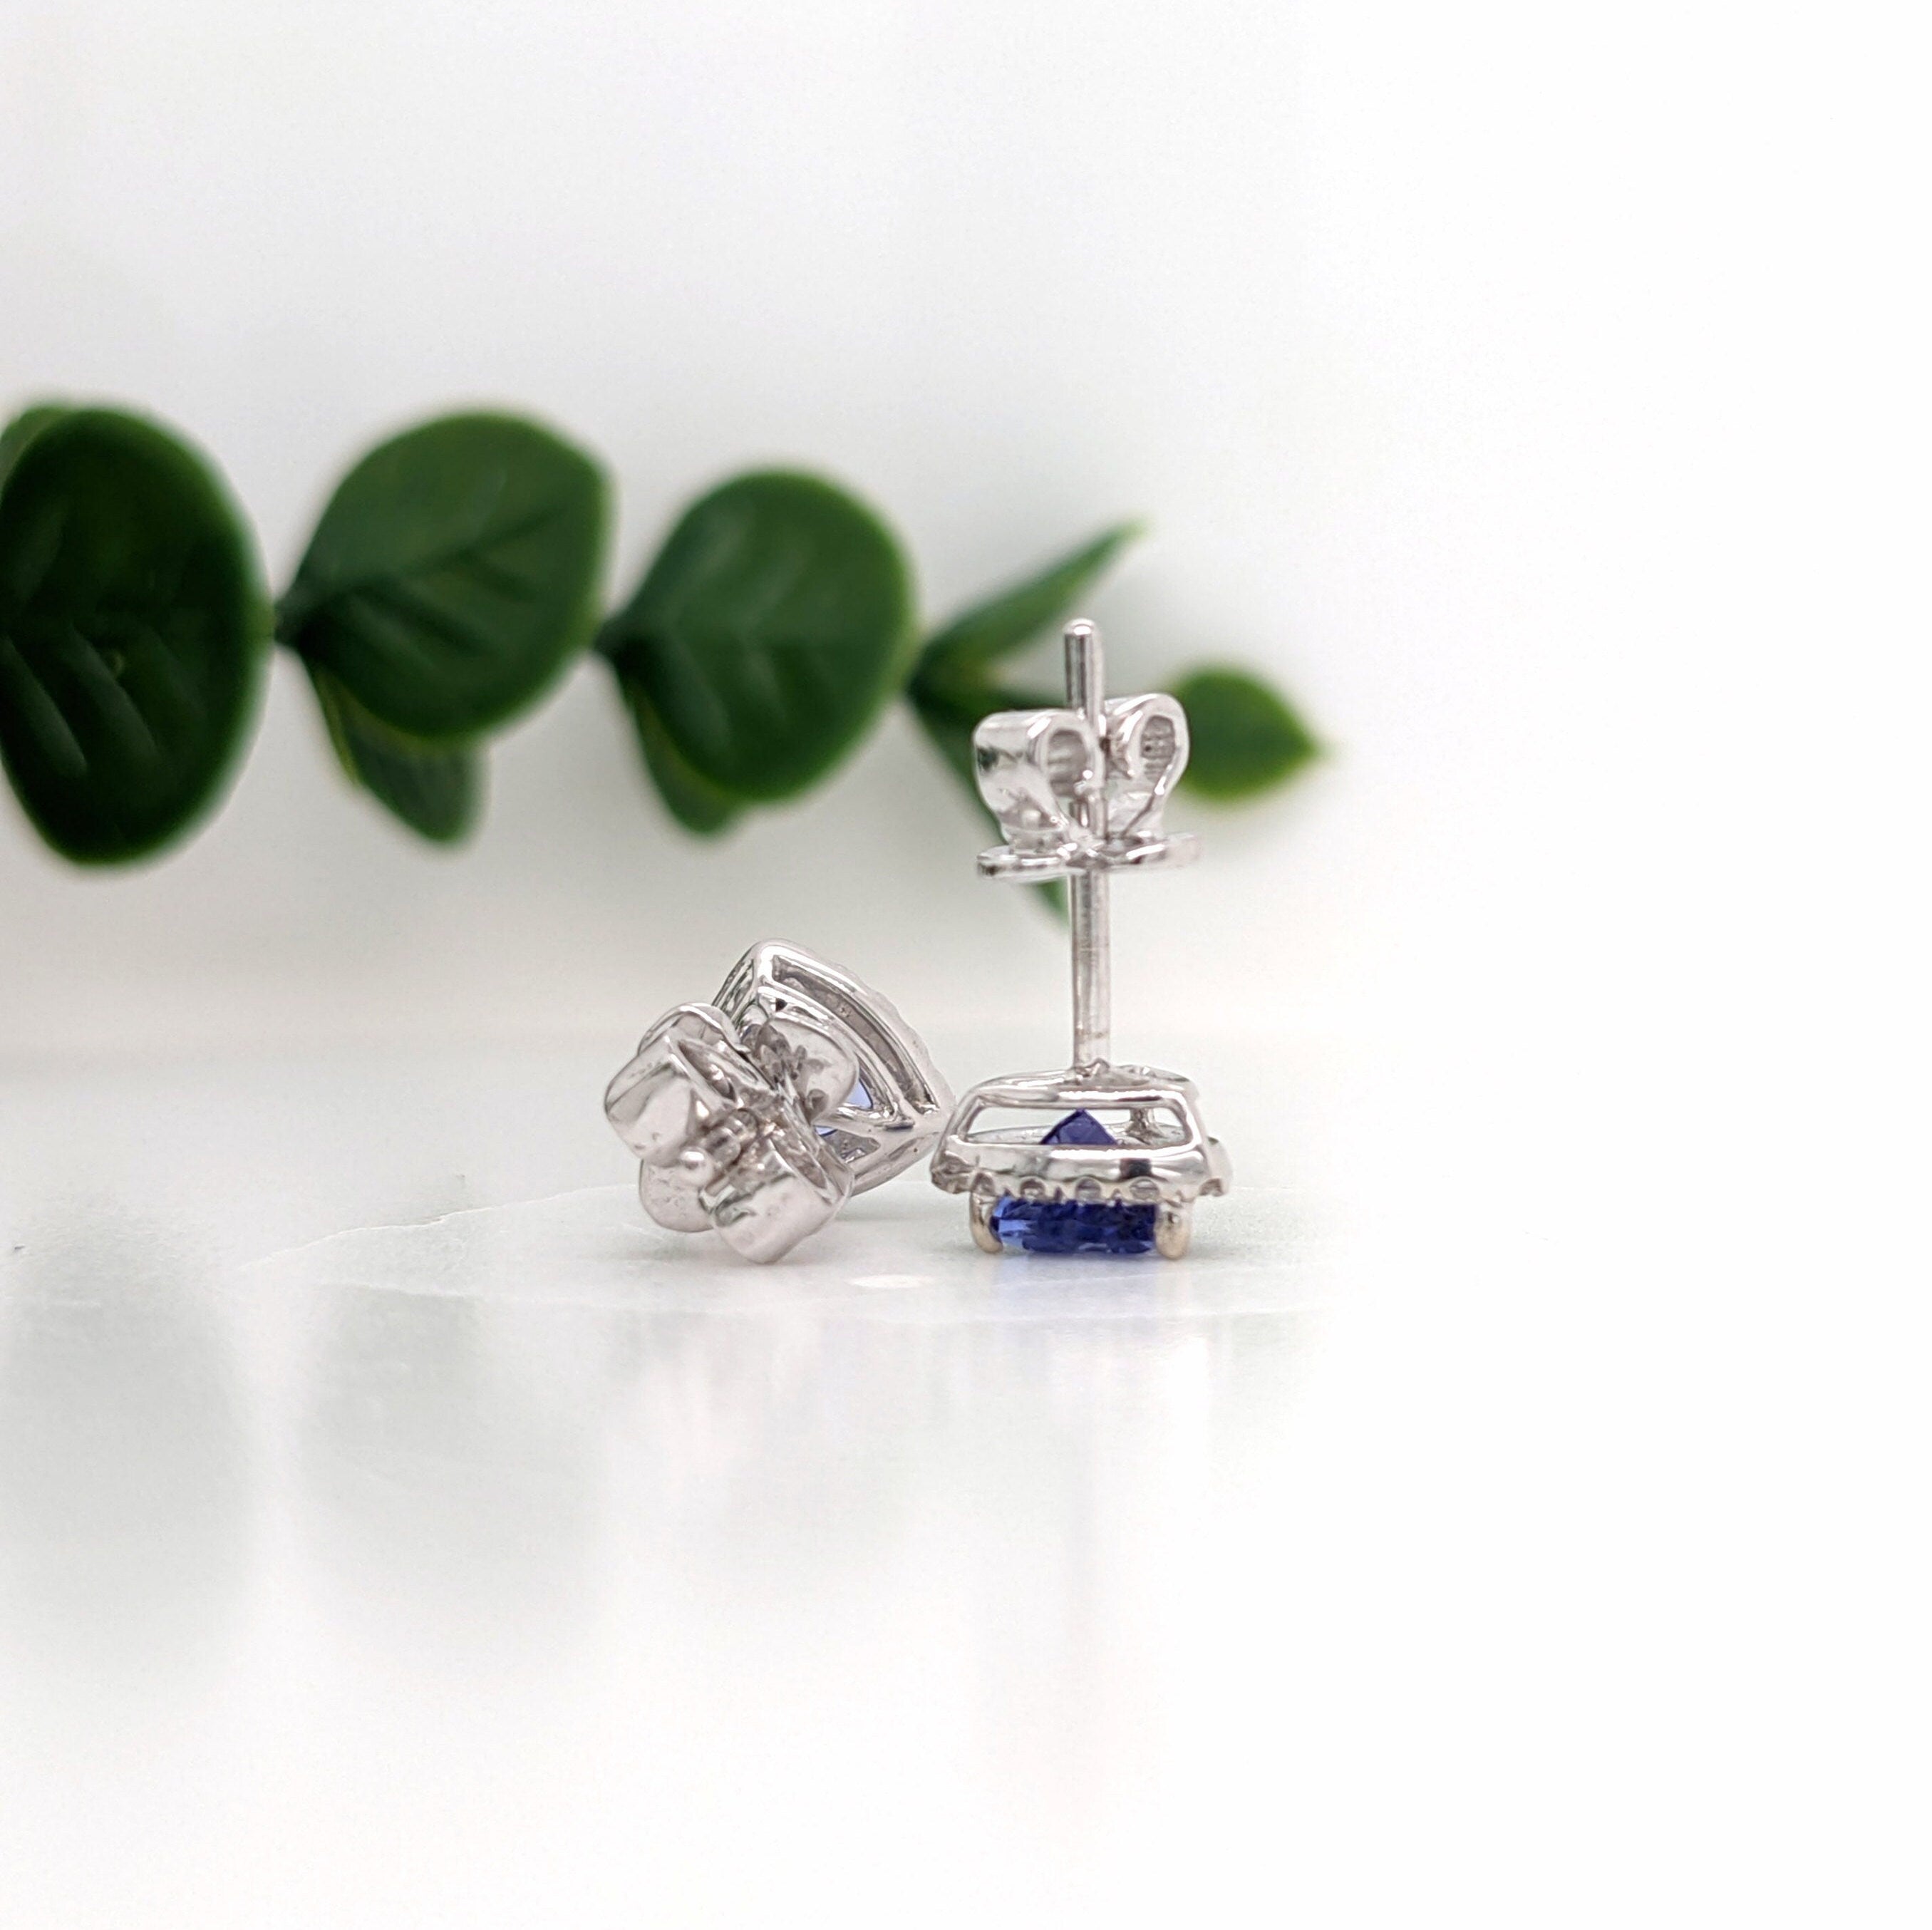 Genuine Tanzanite Earring in 14k White Gold w Diamond Halo | Trillion 4.5mm | December Birthstone | Secure Push Backs | Blue Gemstone Studs